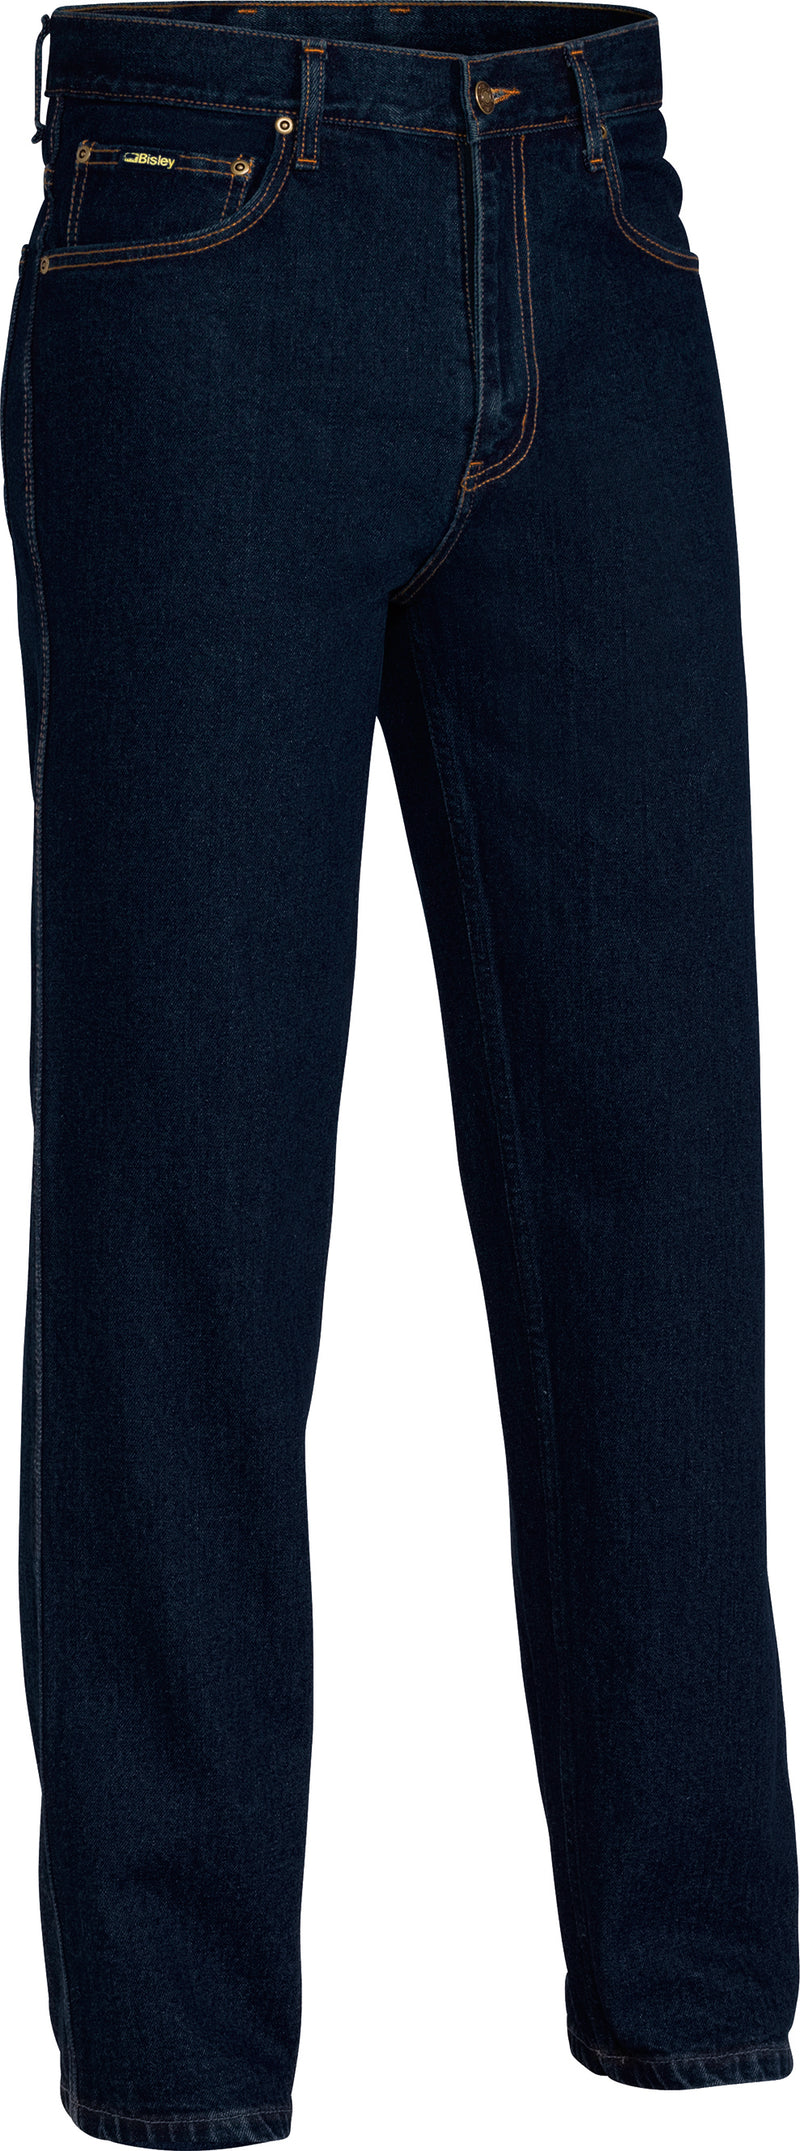 Load image into Gallery viewer, Wholesale BP6050 Bisley Rough Rider Denim Jeans - Regular Printed or Blank
